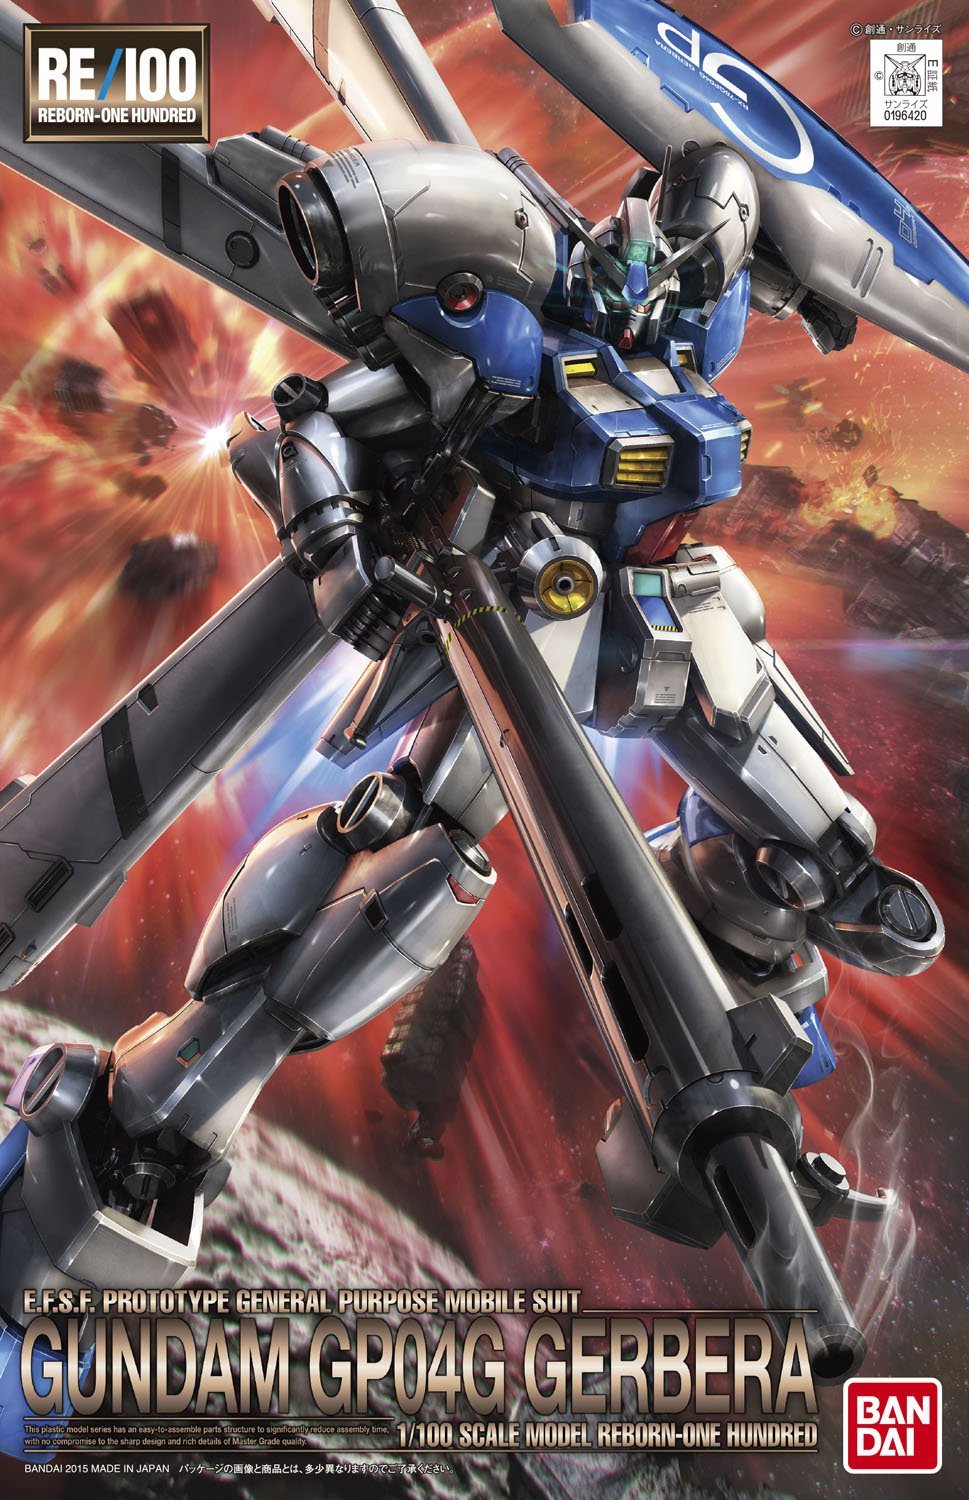 Gundam Reborn-One Hundred #03: Gundam GP04G Gerbera 